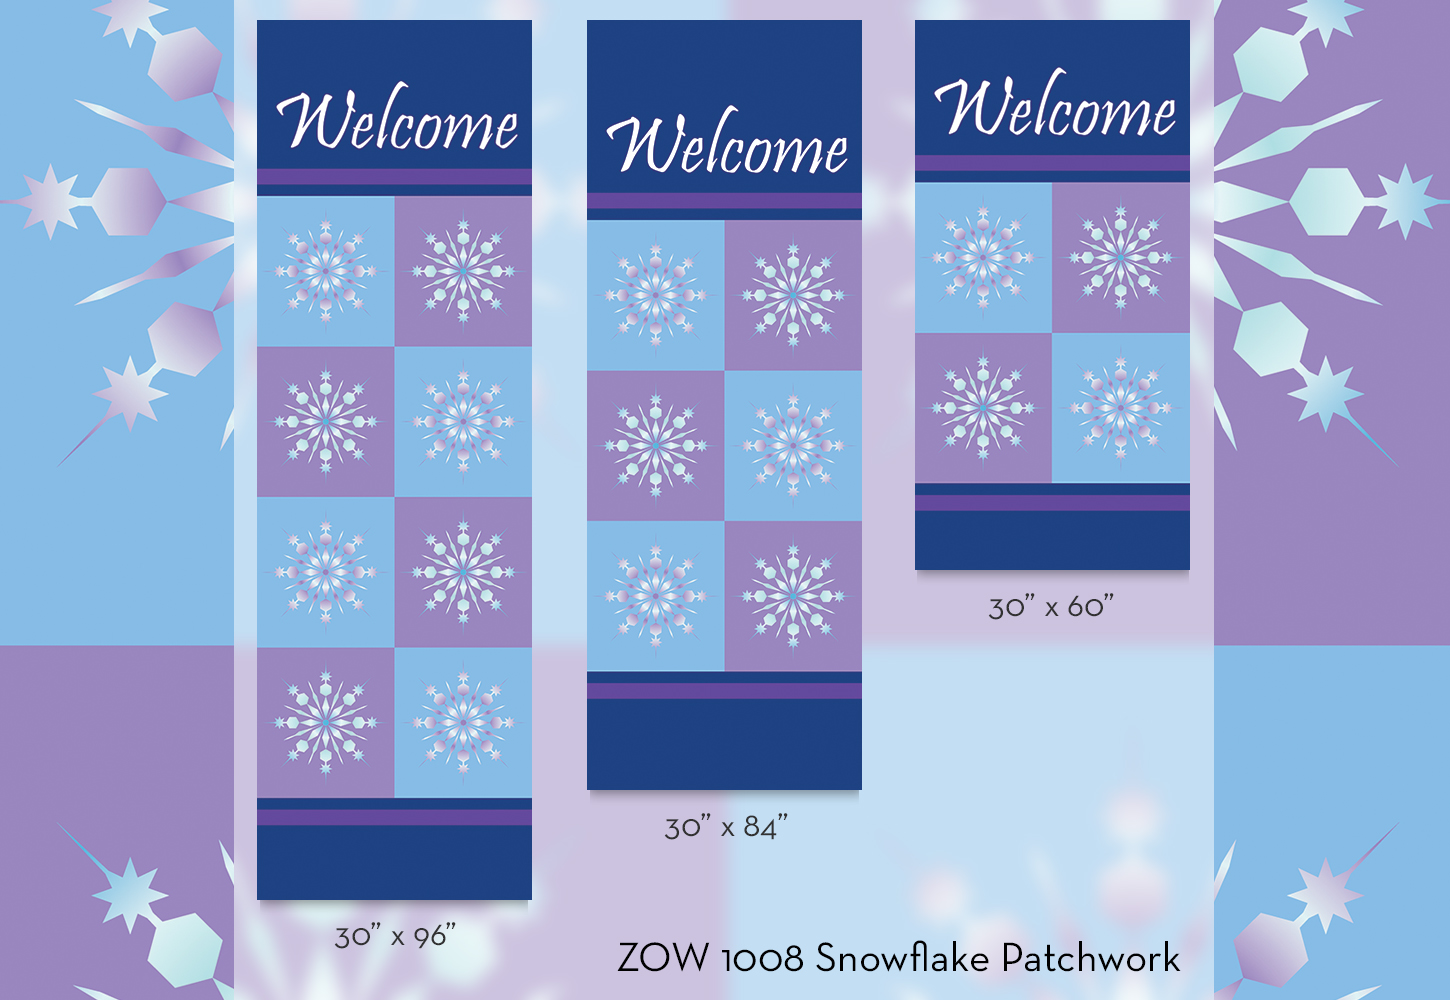 ZOW 1008 Snowflake Patchwork